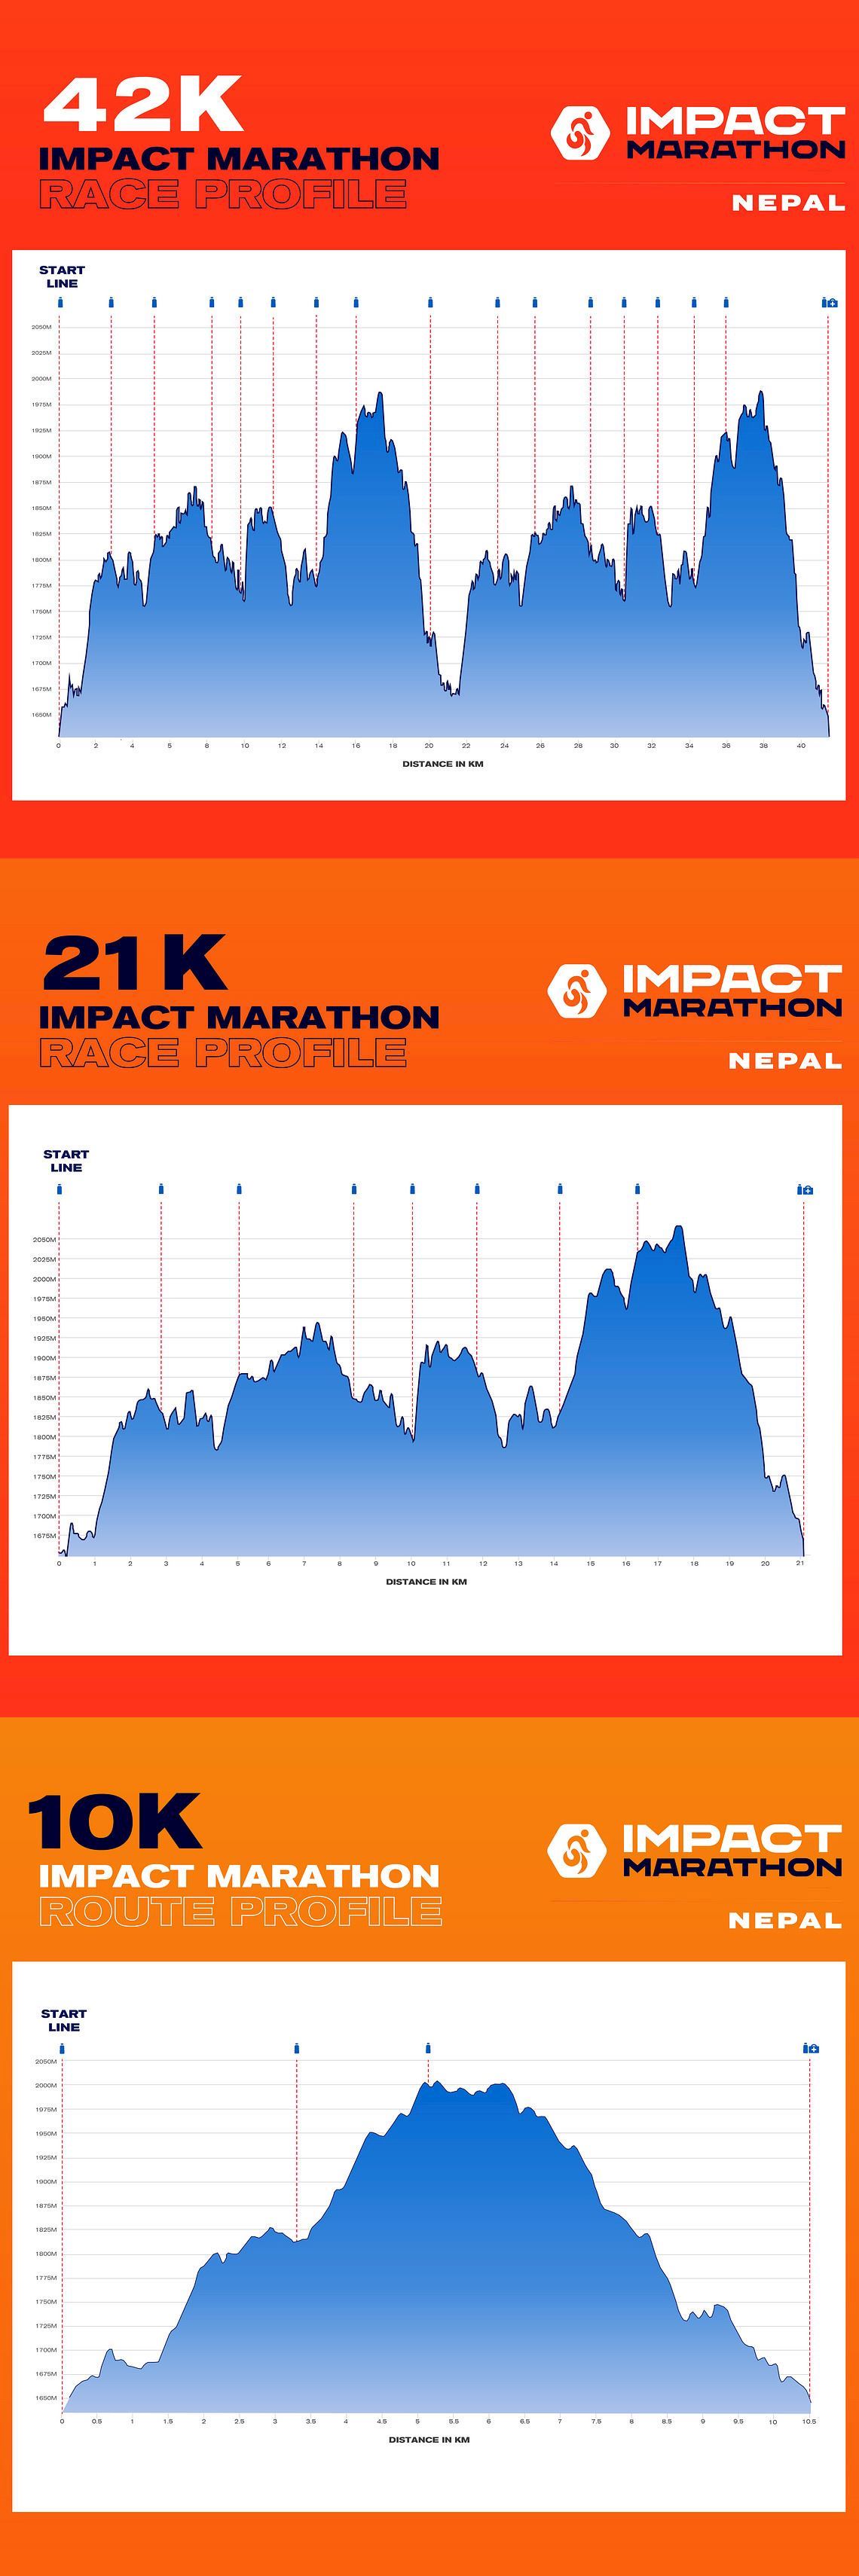 Nepal Impact Marathon Route Map